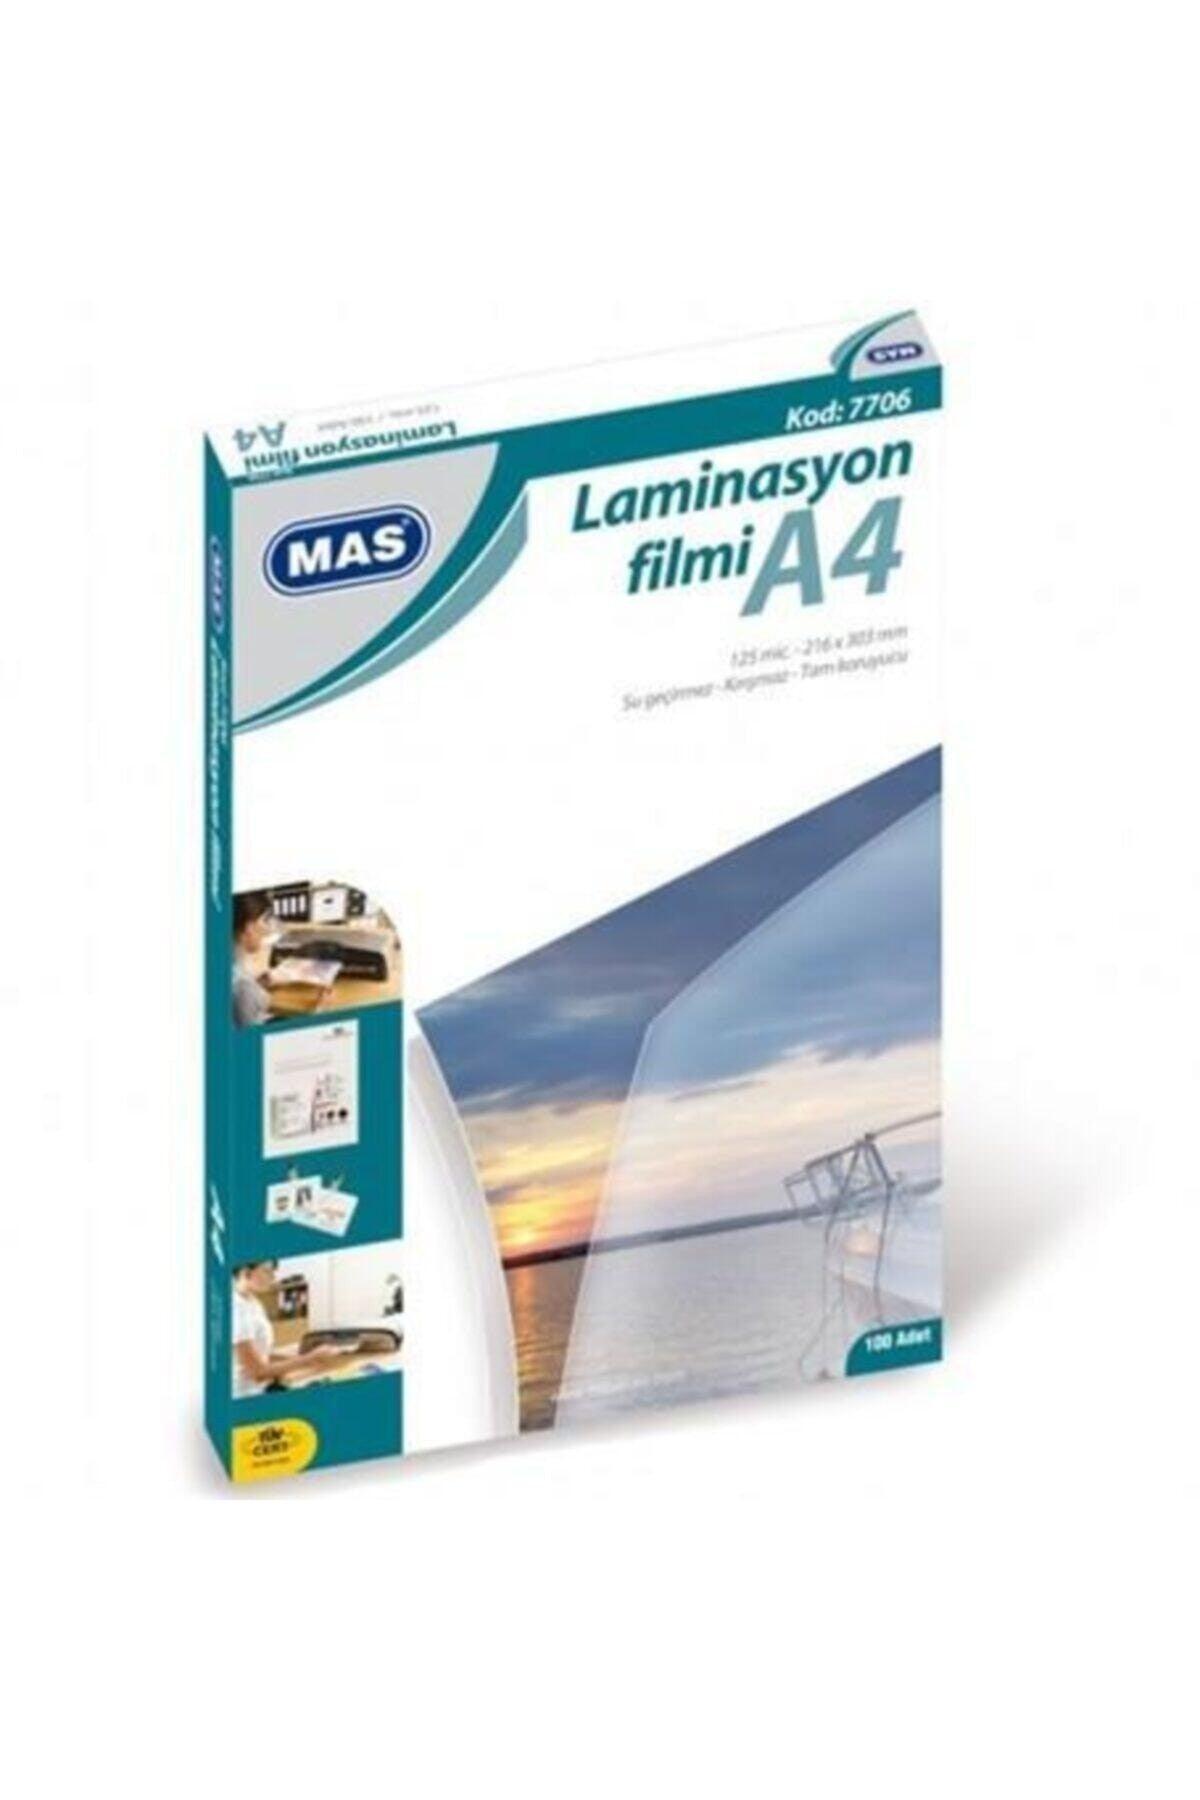 Lamination Film A4 125 Mic.100 Lü 7706/